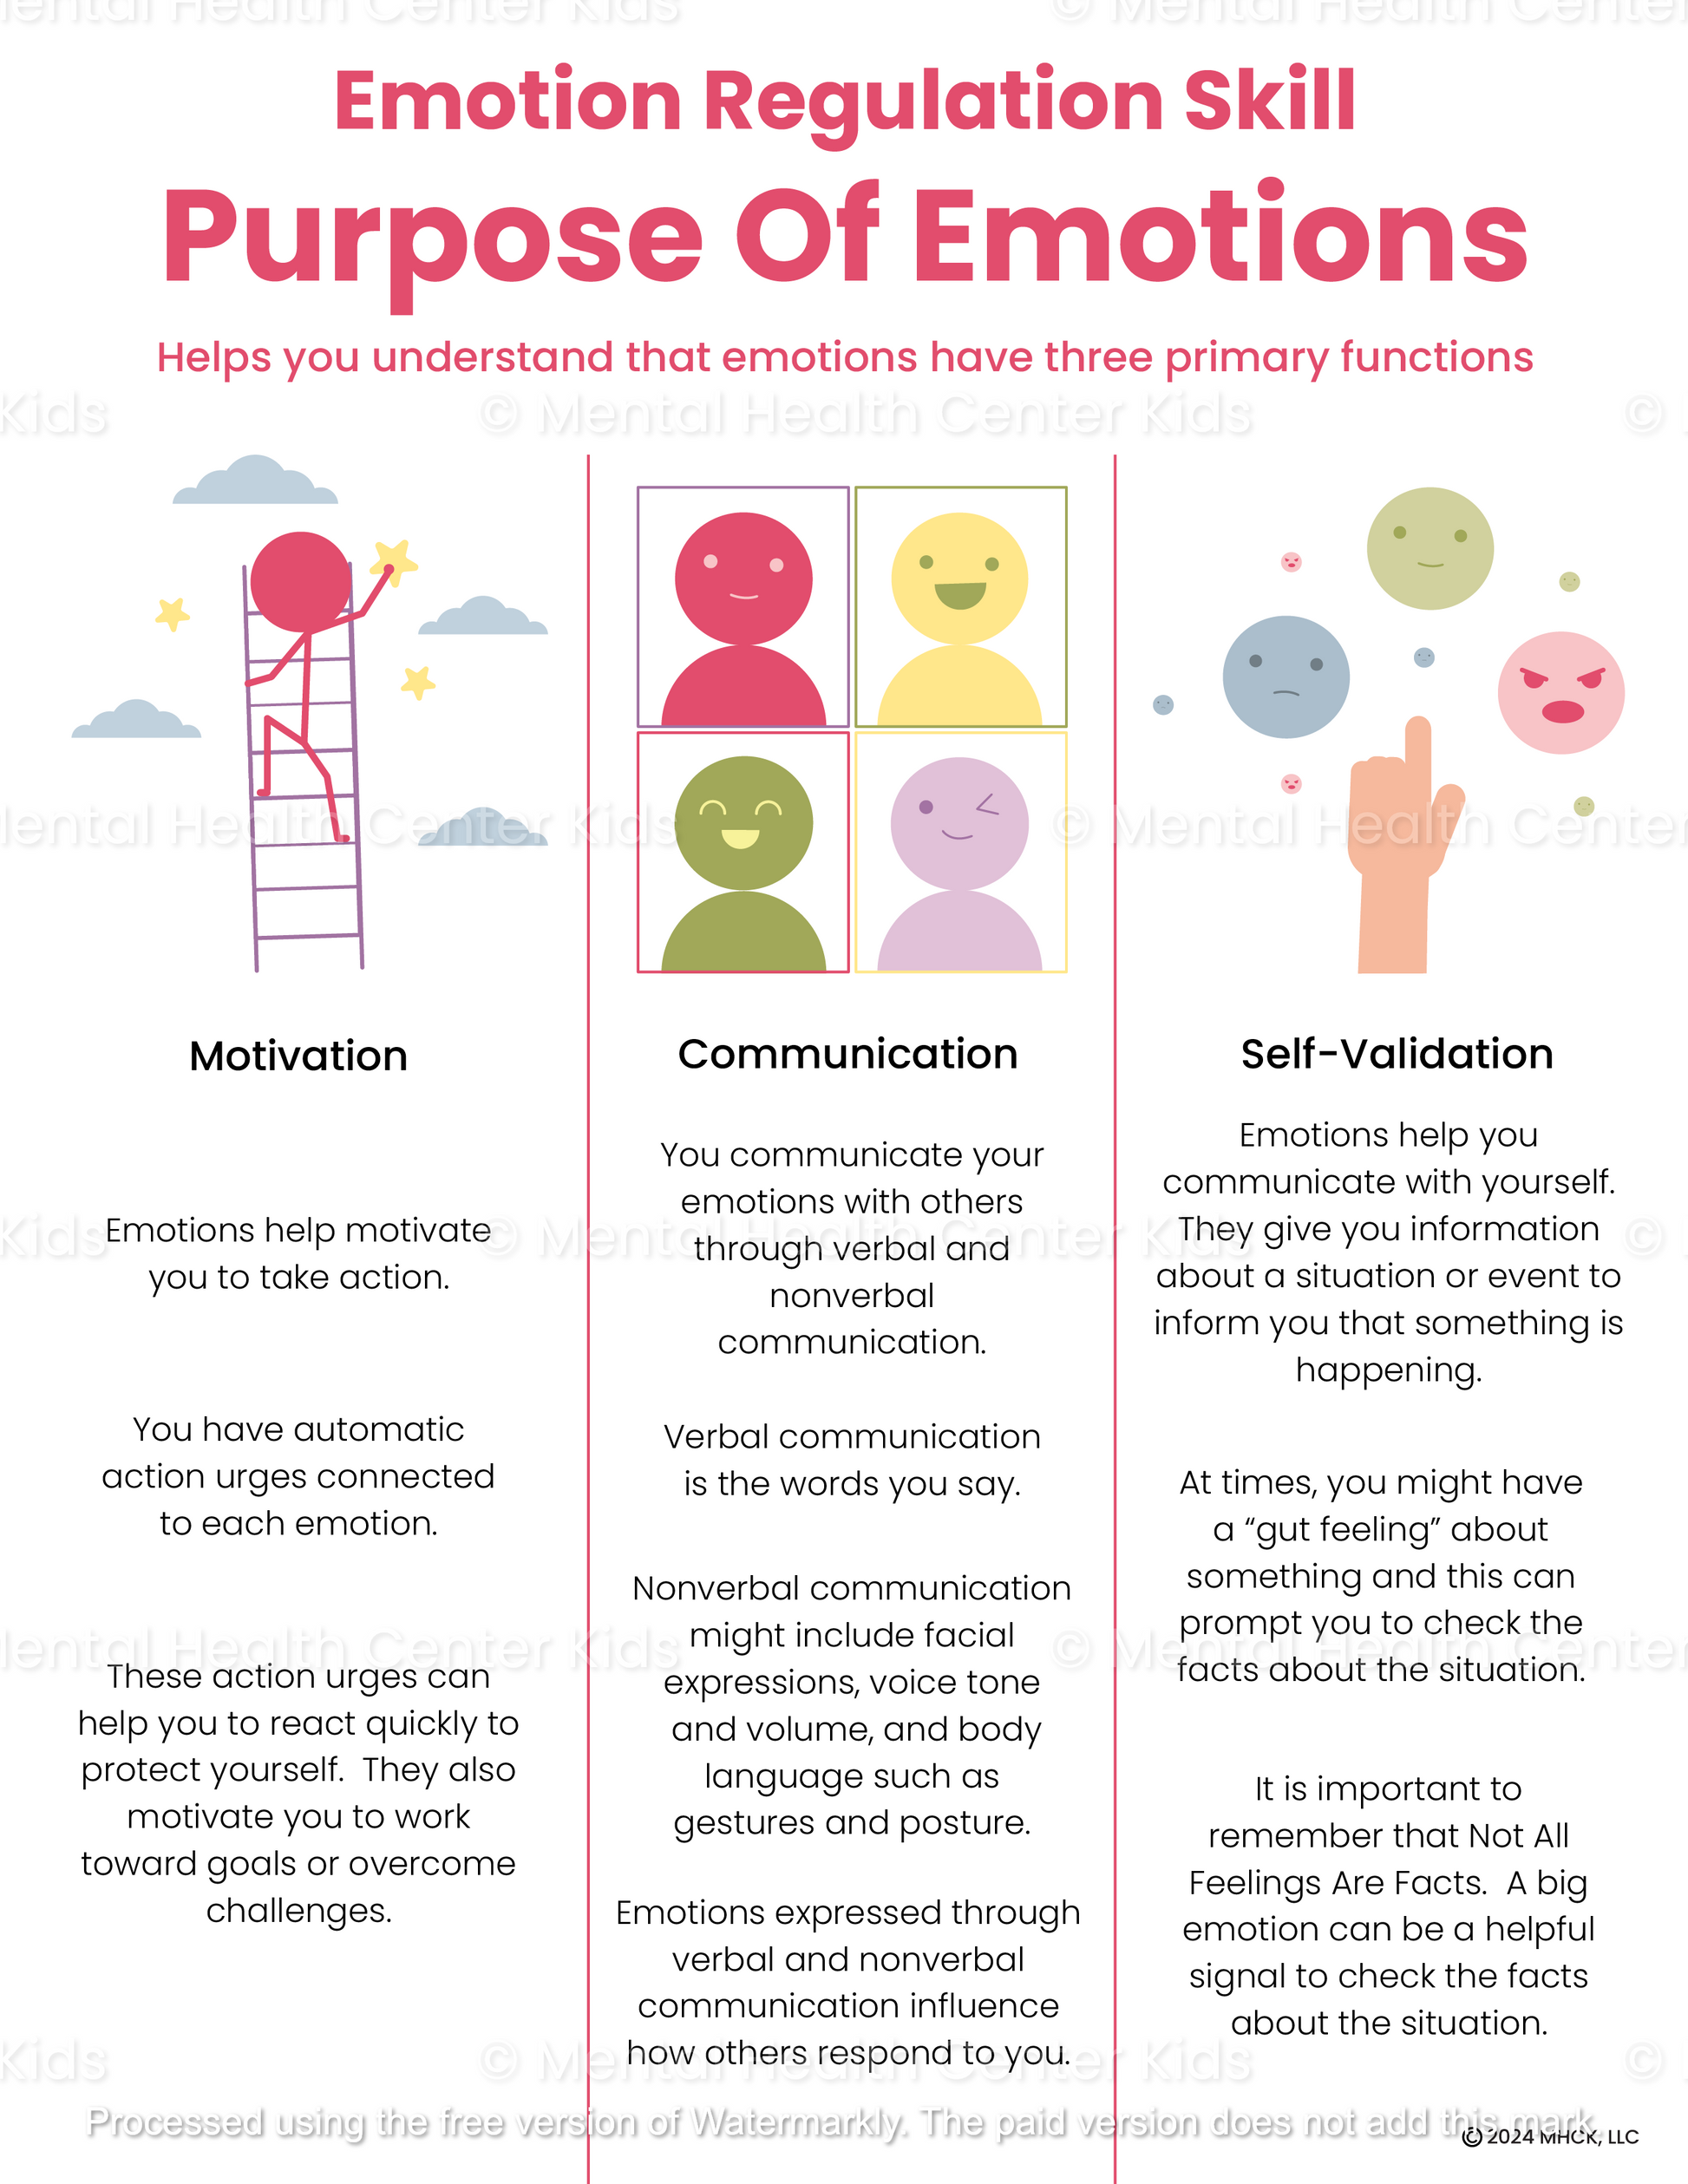 purpose of emotions dbt